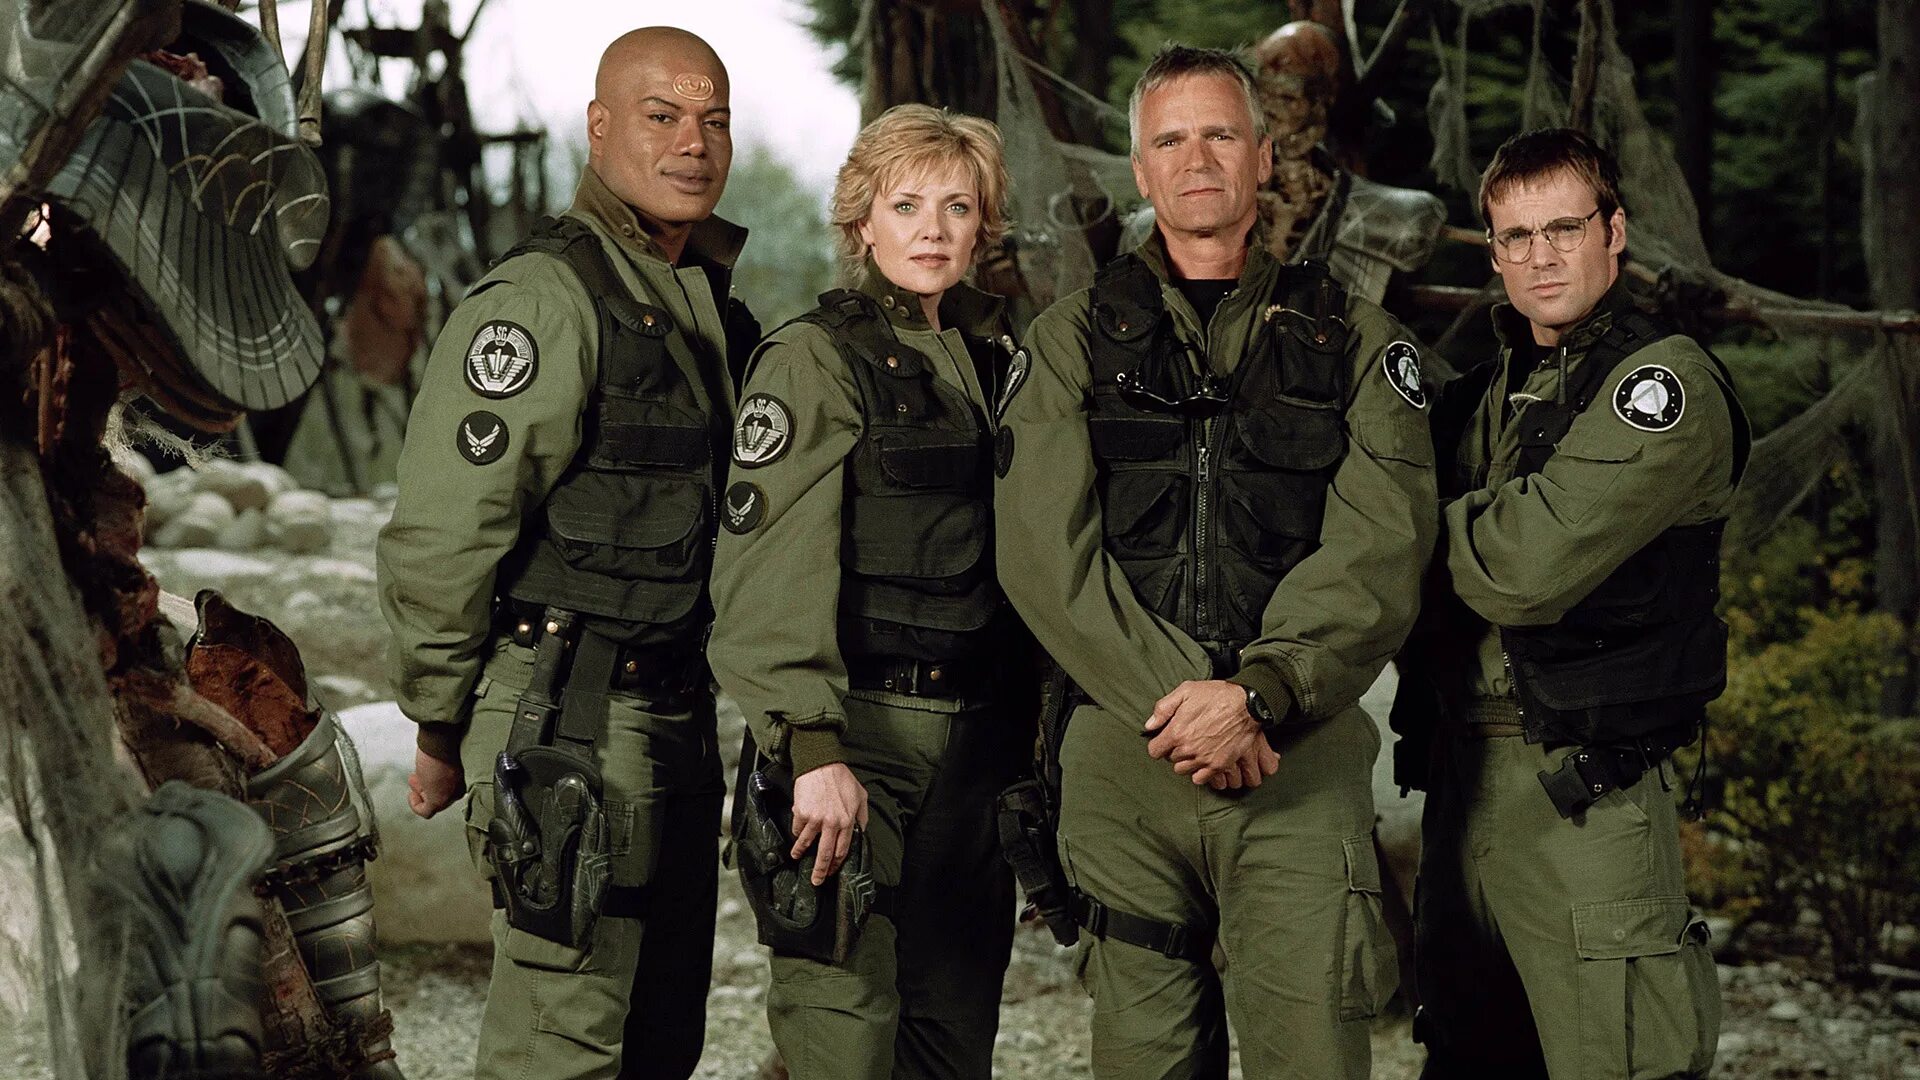 Stargate sg 1. Звездные врата зв-1" (1997-2007). Звездные врата зв1 Шаори.